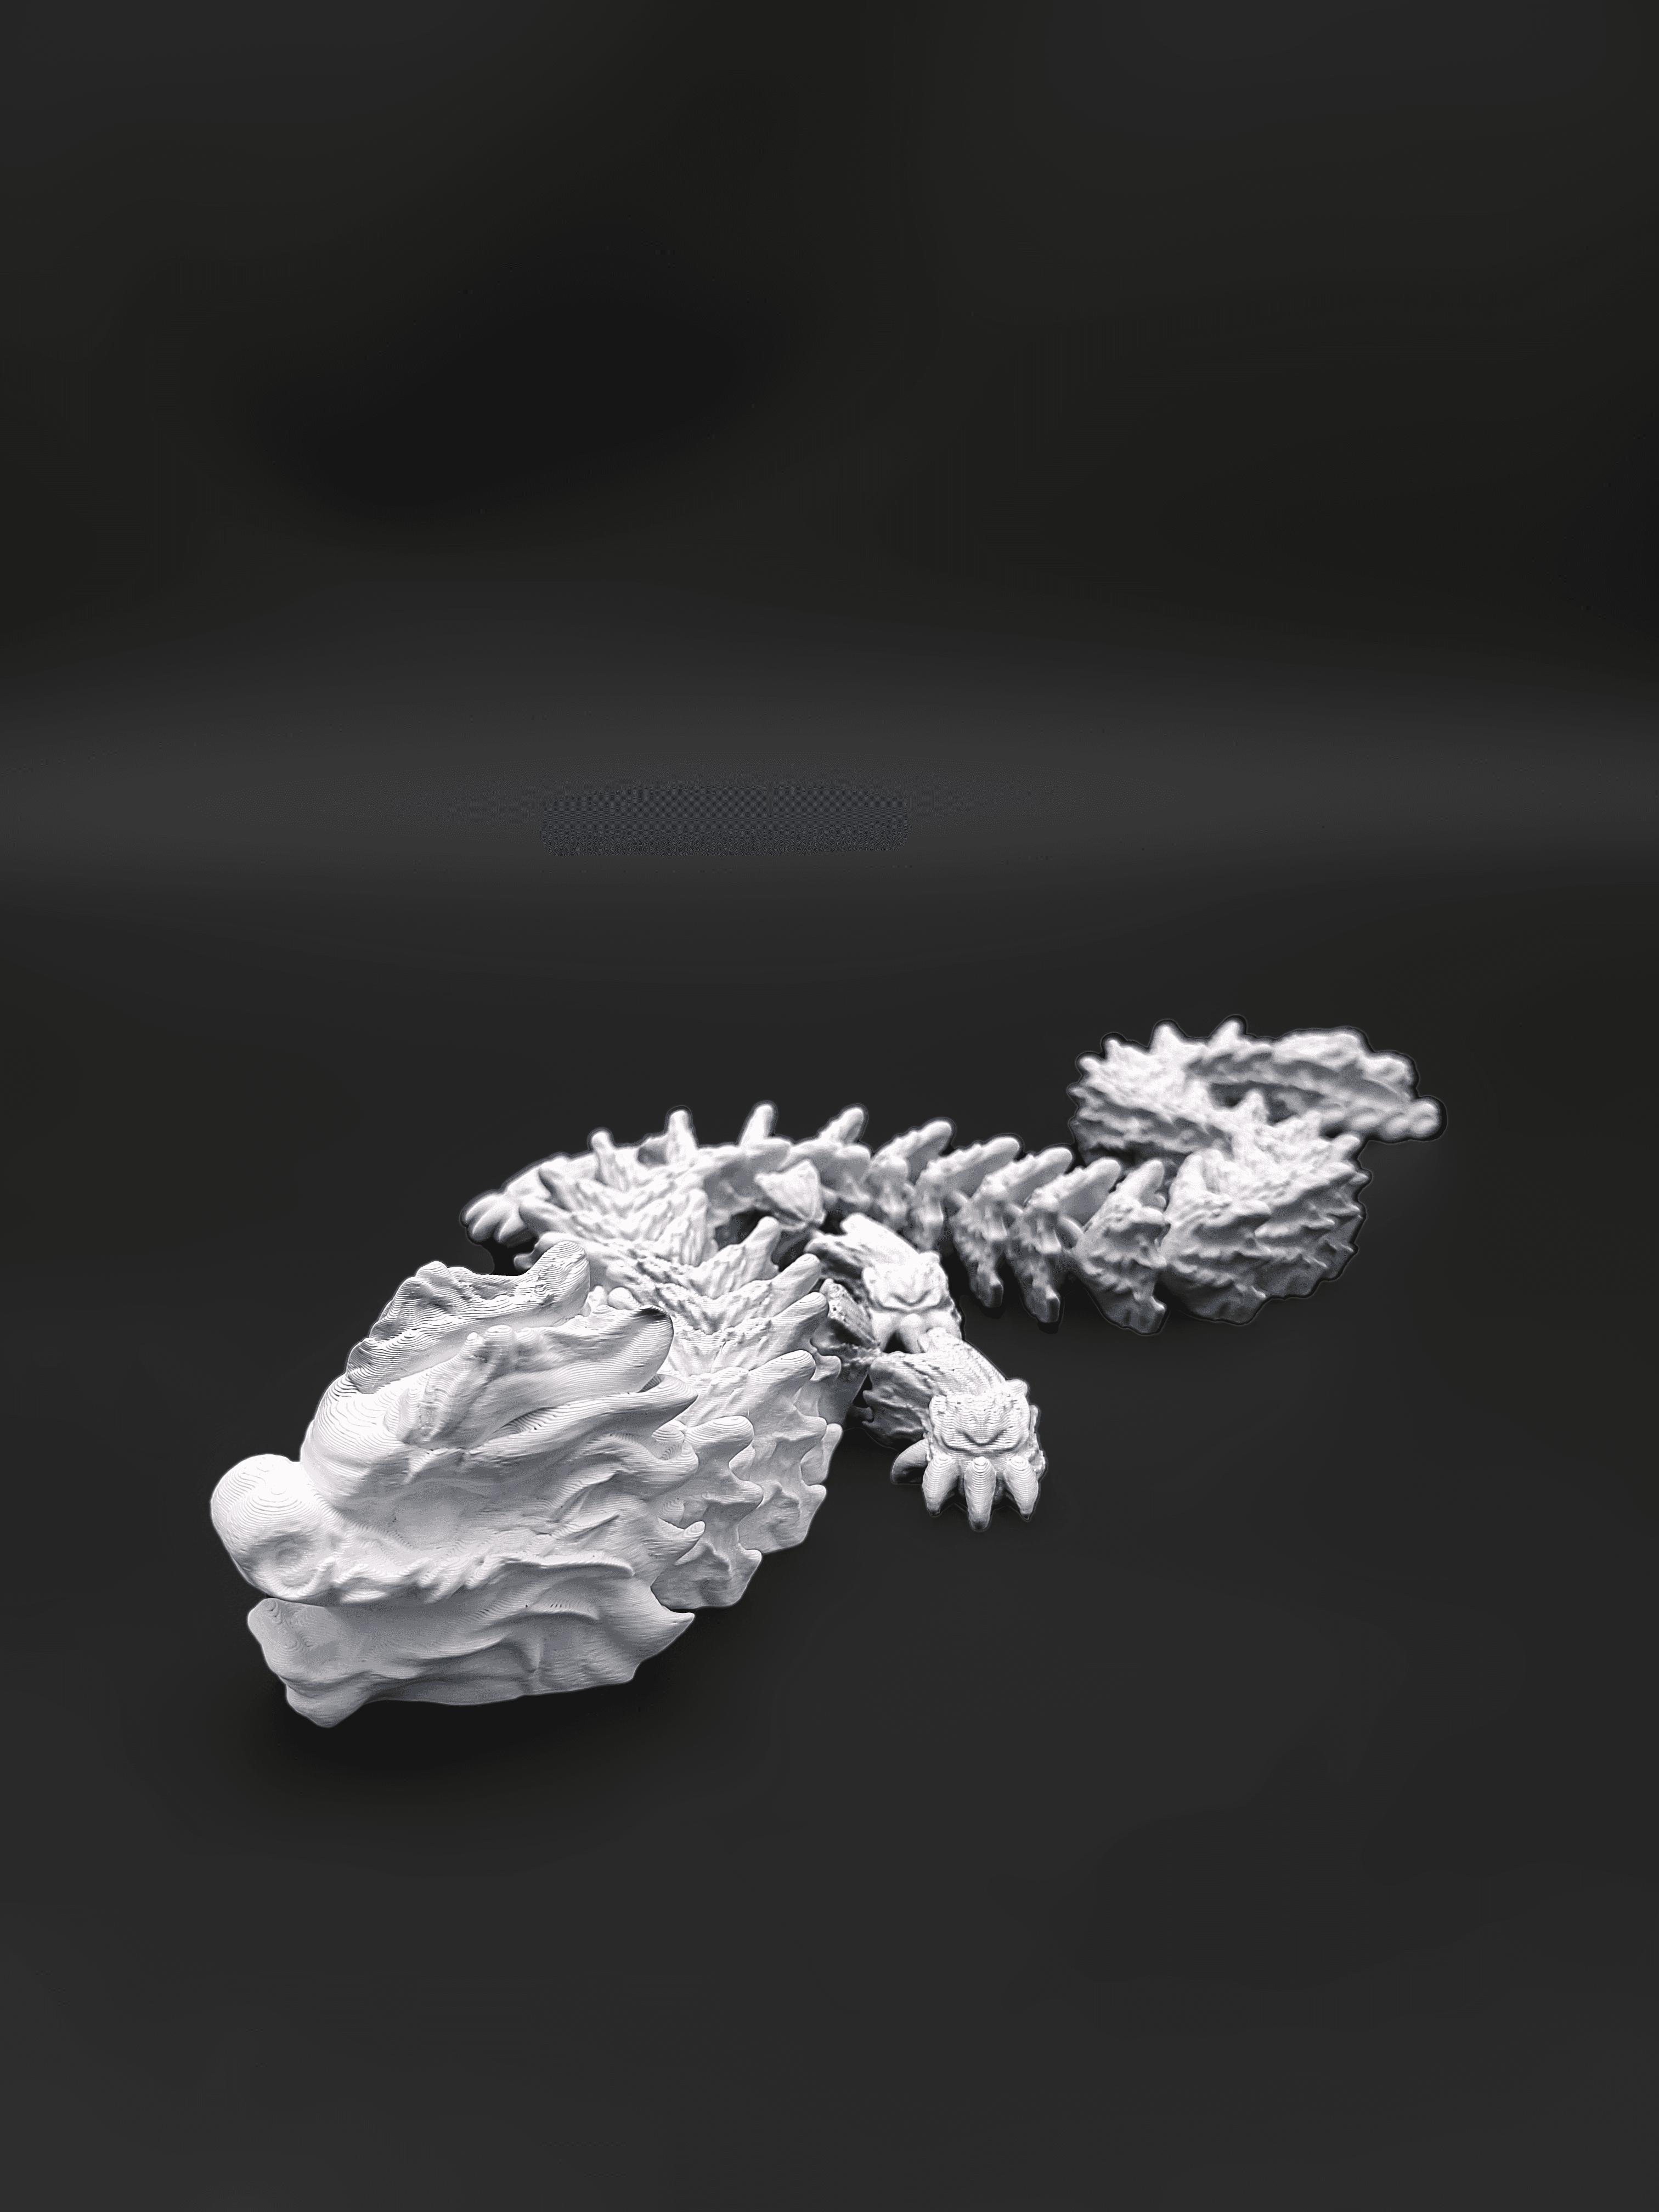 Snowstorm, Winter Dragon - Articulated Dragon Snap-Flex Fidget (Medium Tightness Joints) 3d model